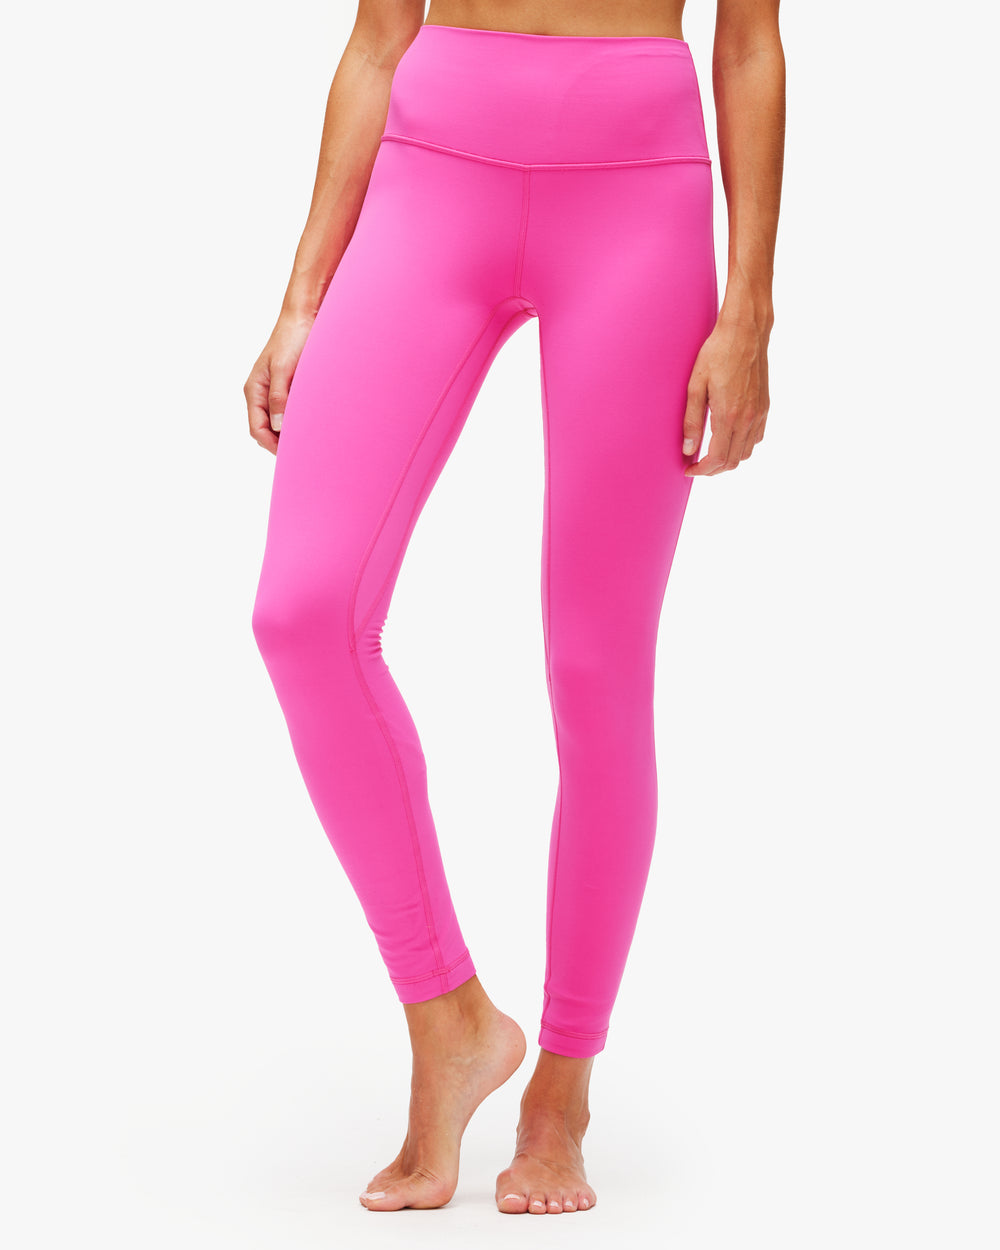 Lululemon leggings  Lululemon leggings, Hot pink leggings, Low rise  leggings